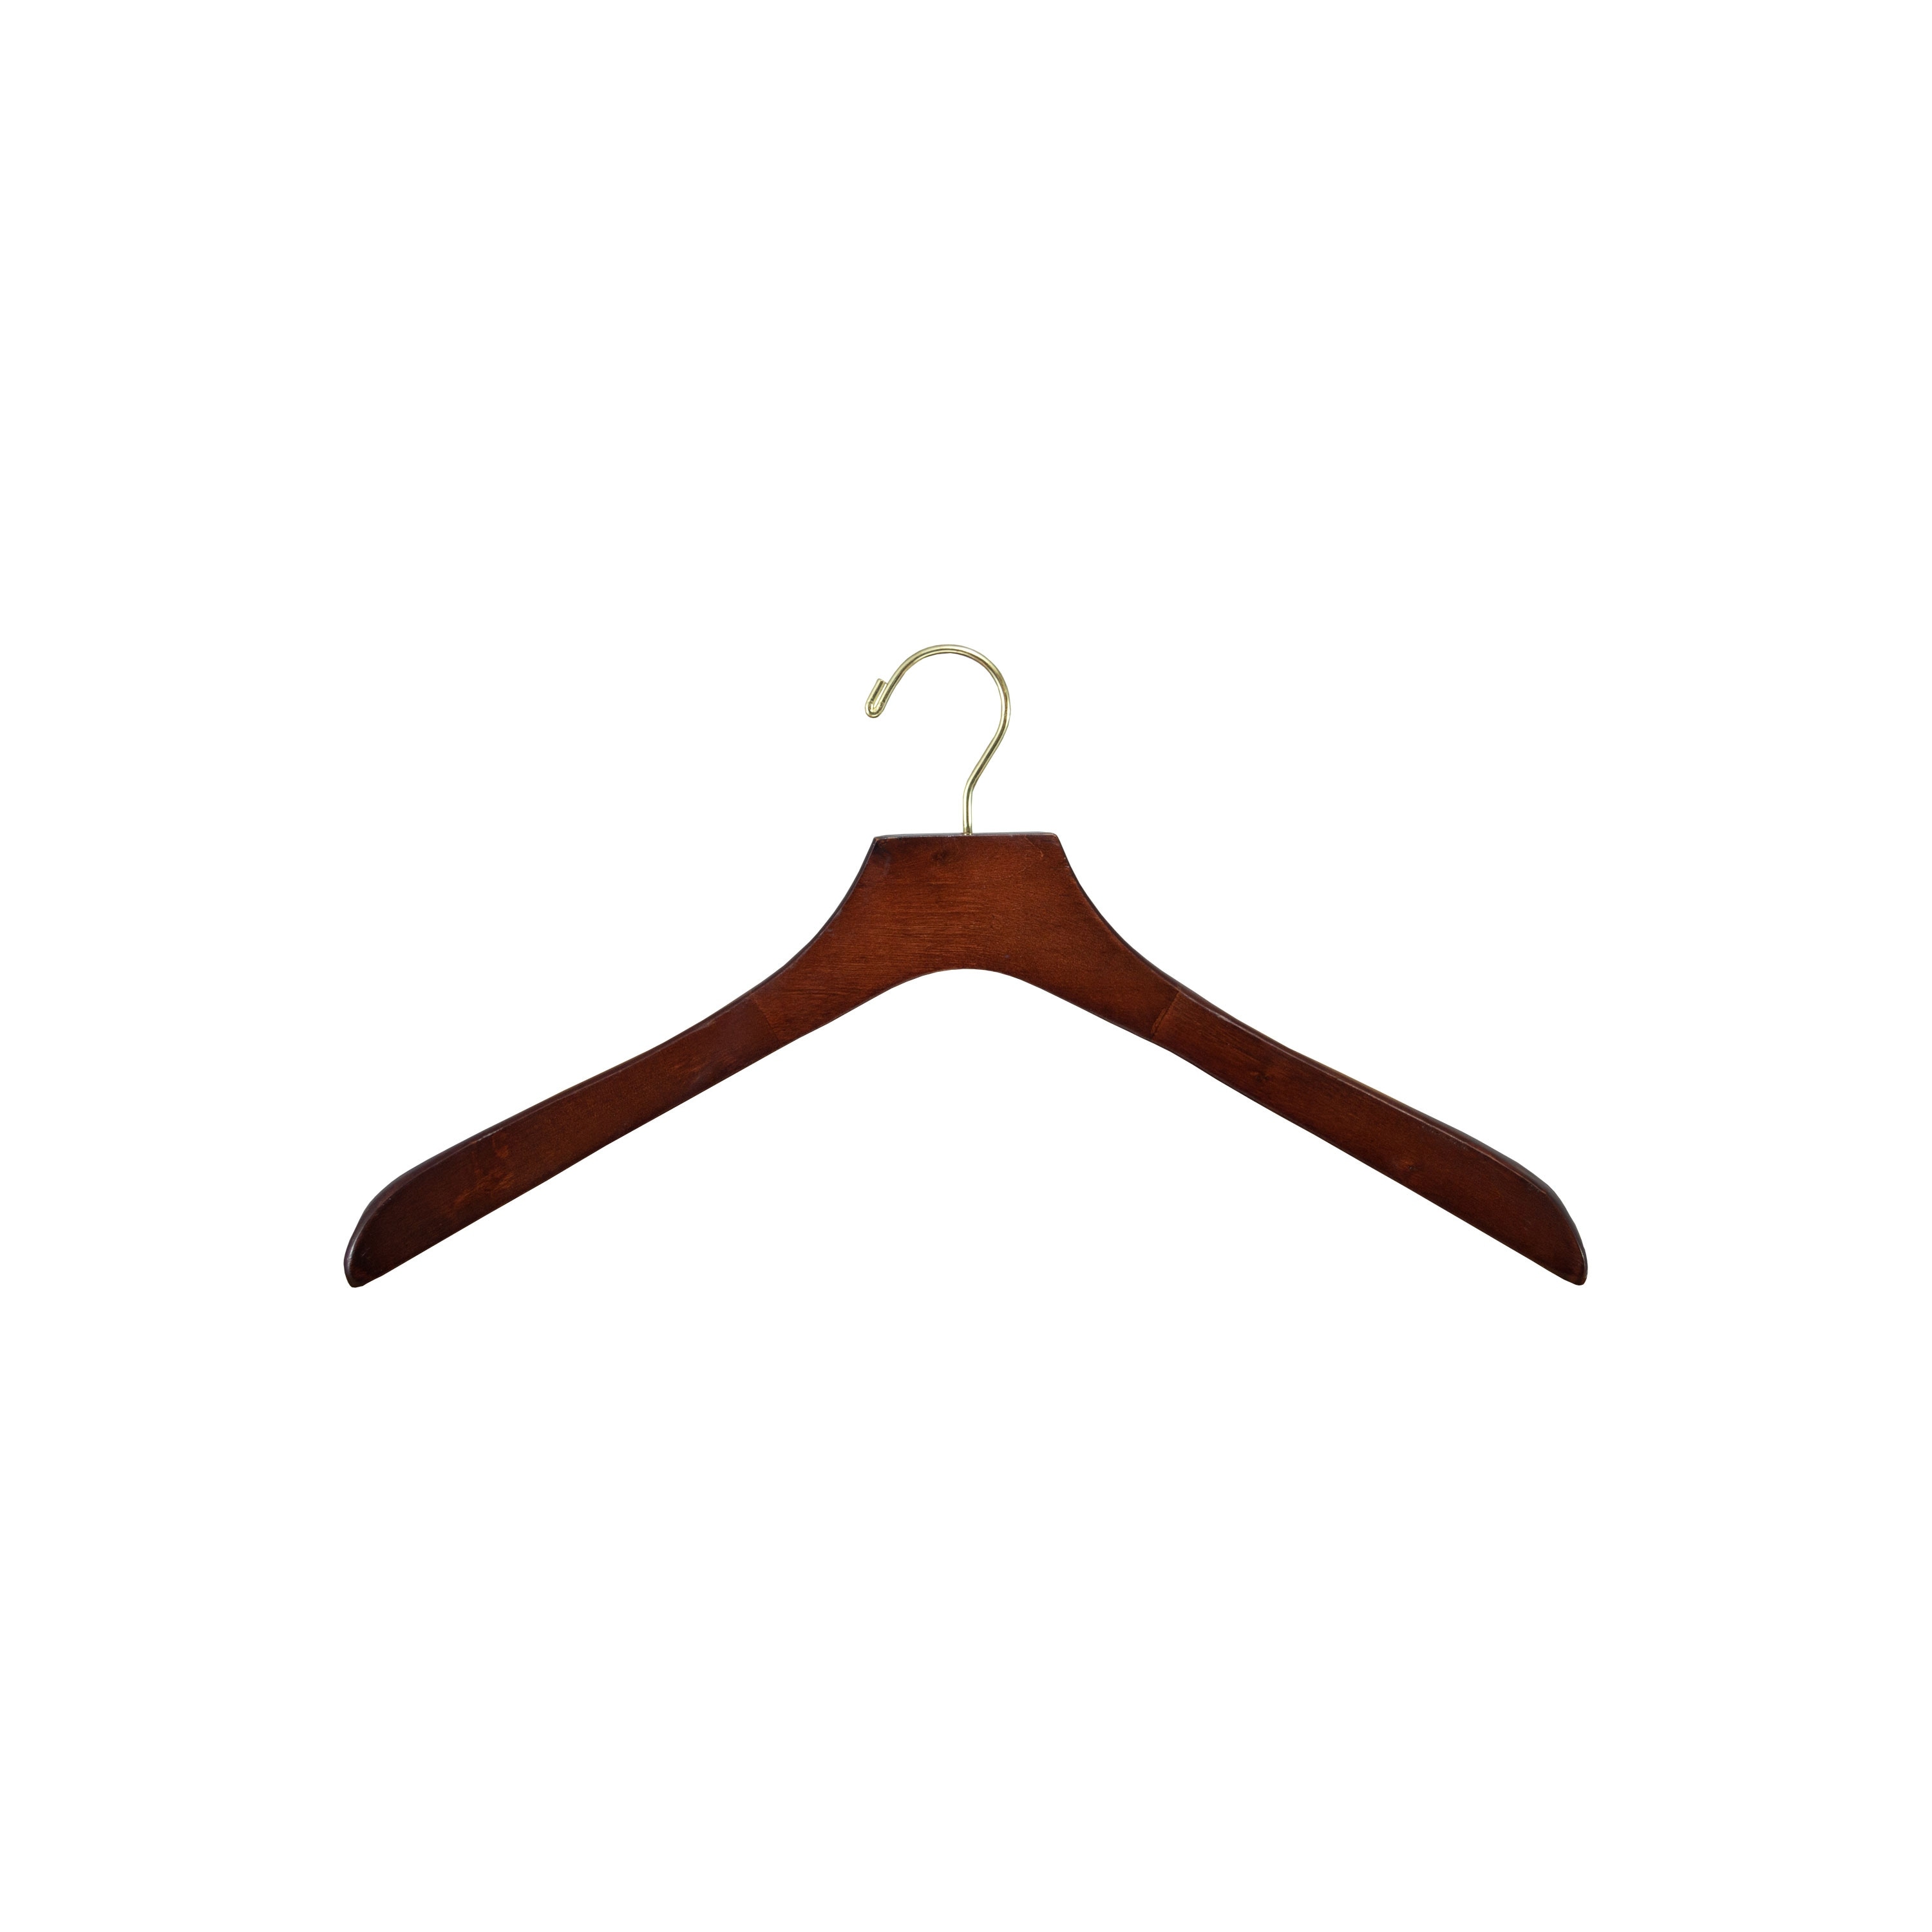 Walnut Brown Wooden Coat Hangers with Brass Hooks